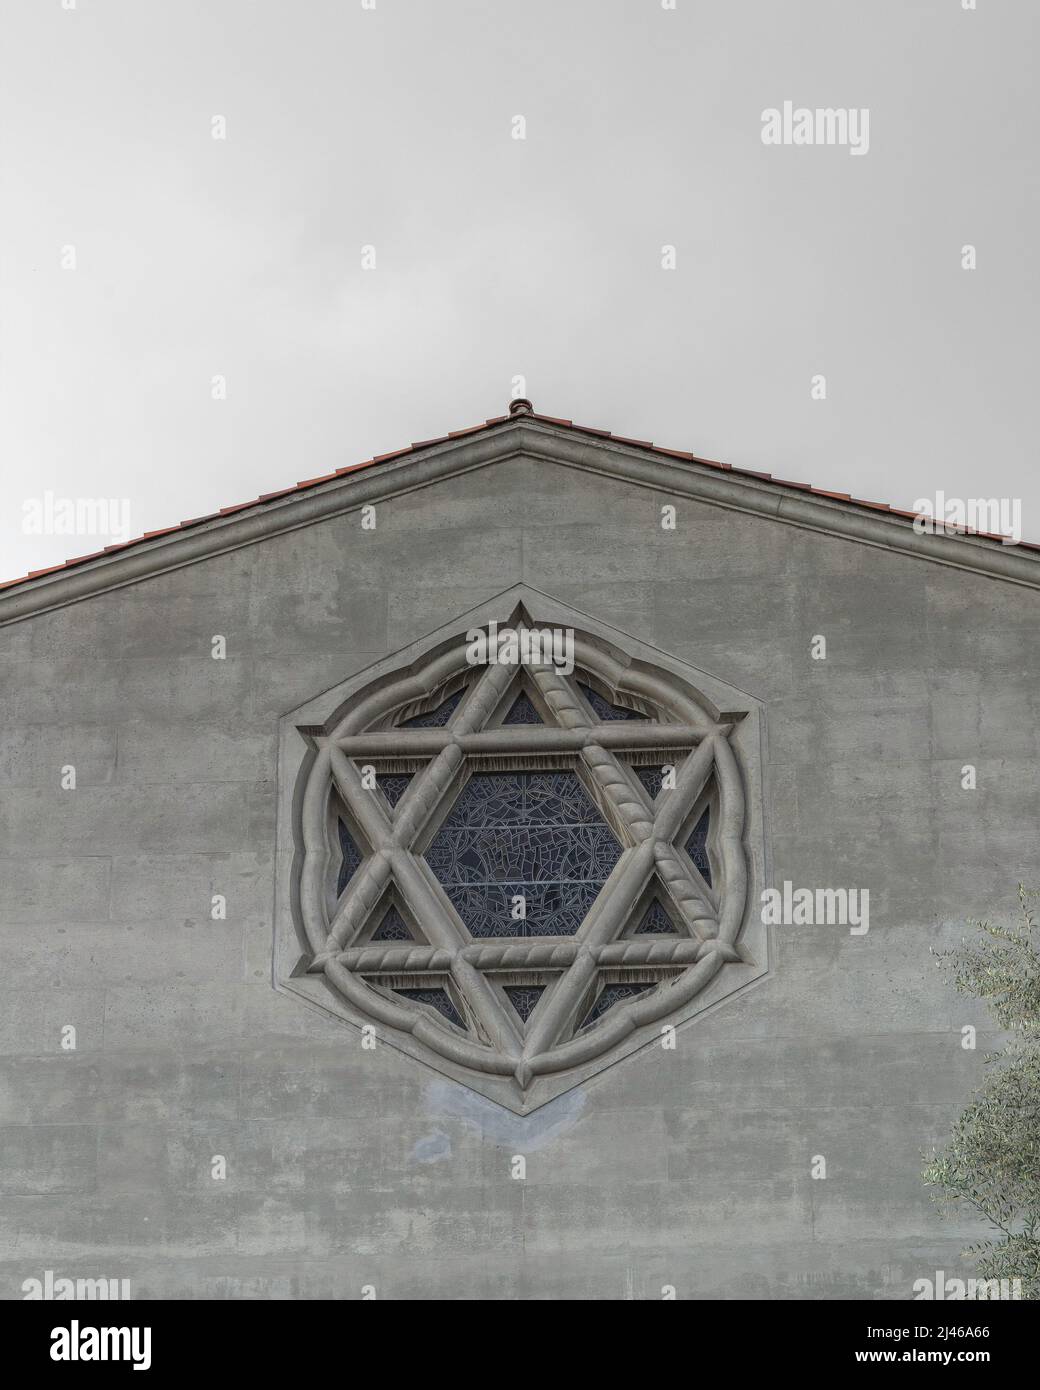 Cerca de la Estrella de David en una Sinagoga. Foto de stock